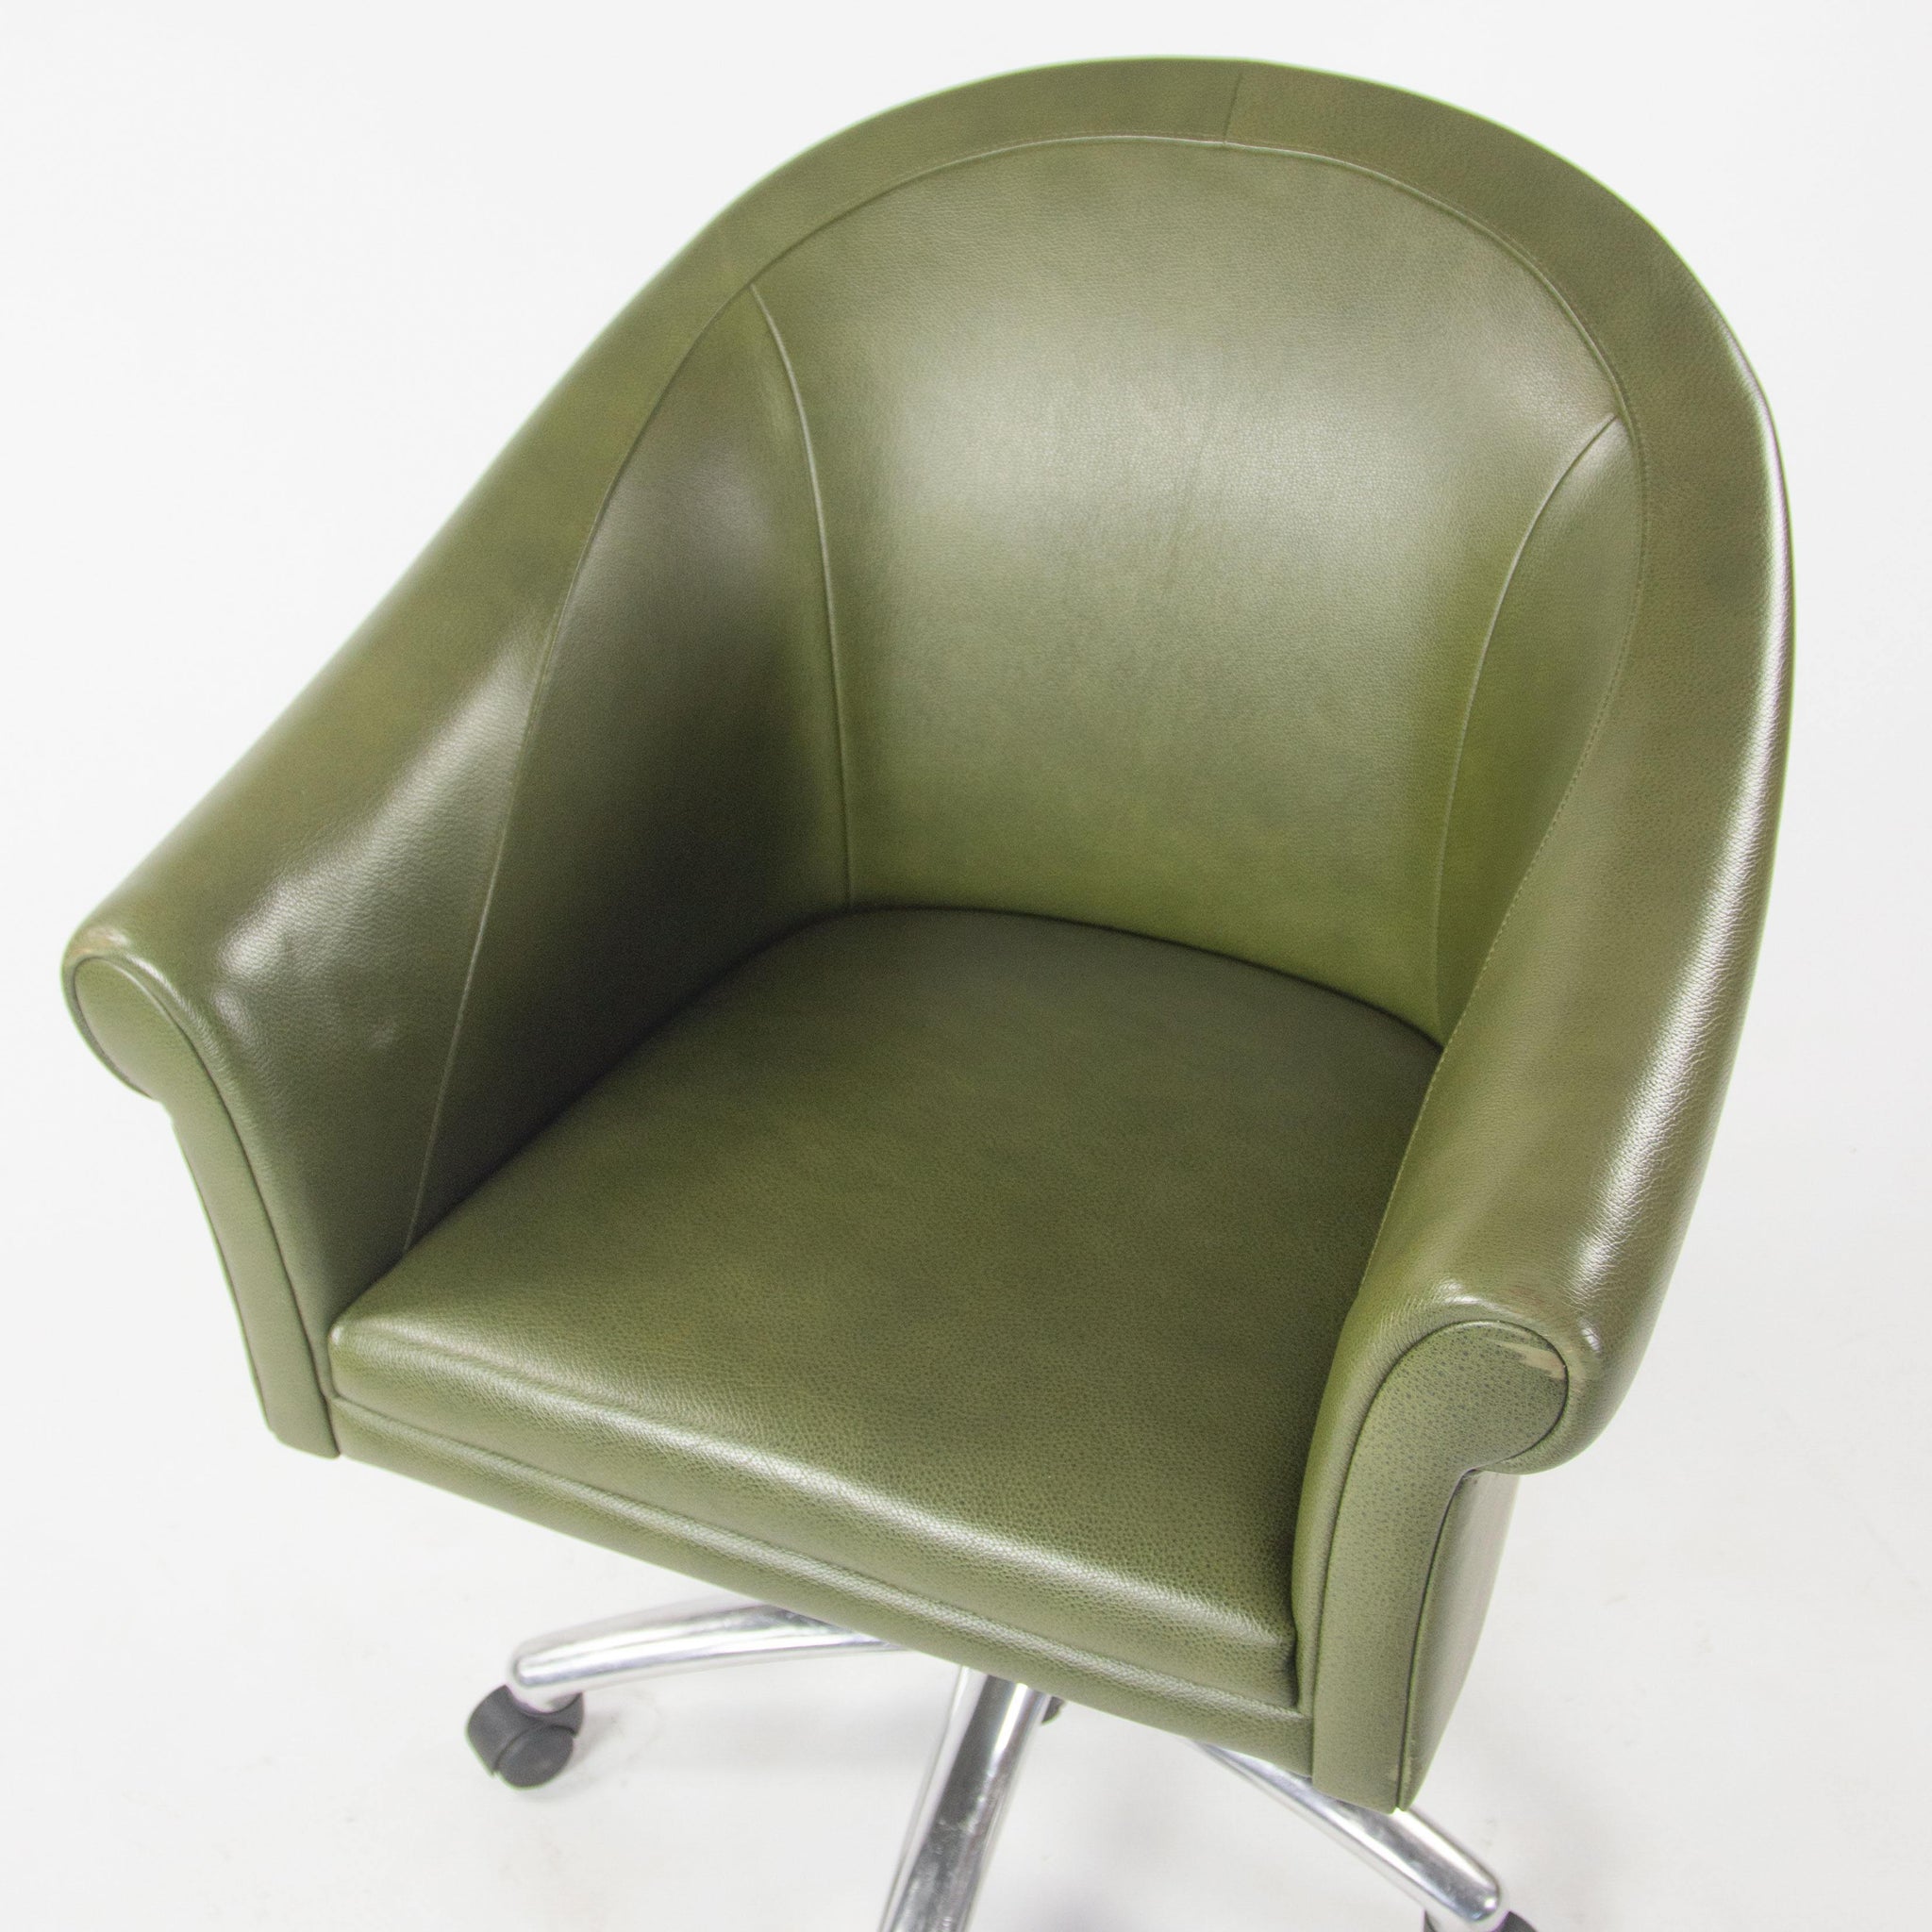 Poltrona Frau Green Leather Luca Scacchetti Sinan Office Desk Chair Mult Avail - Rarify Inc.